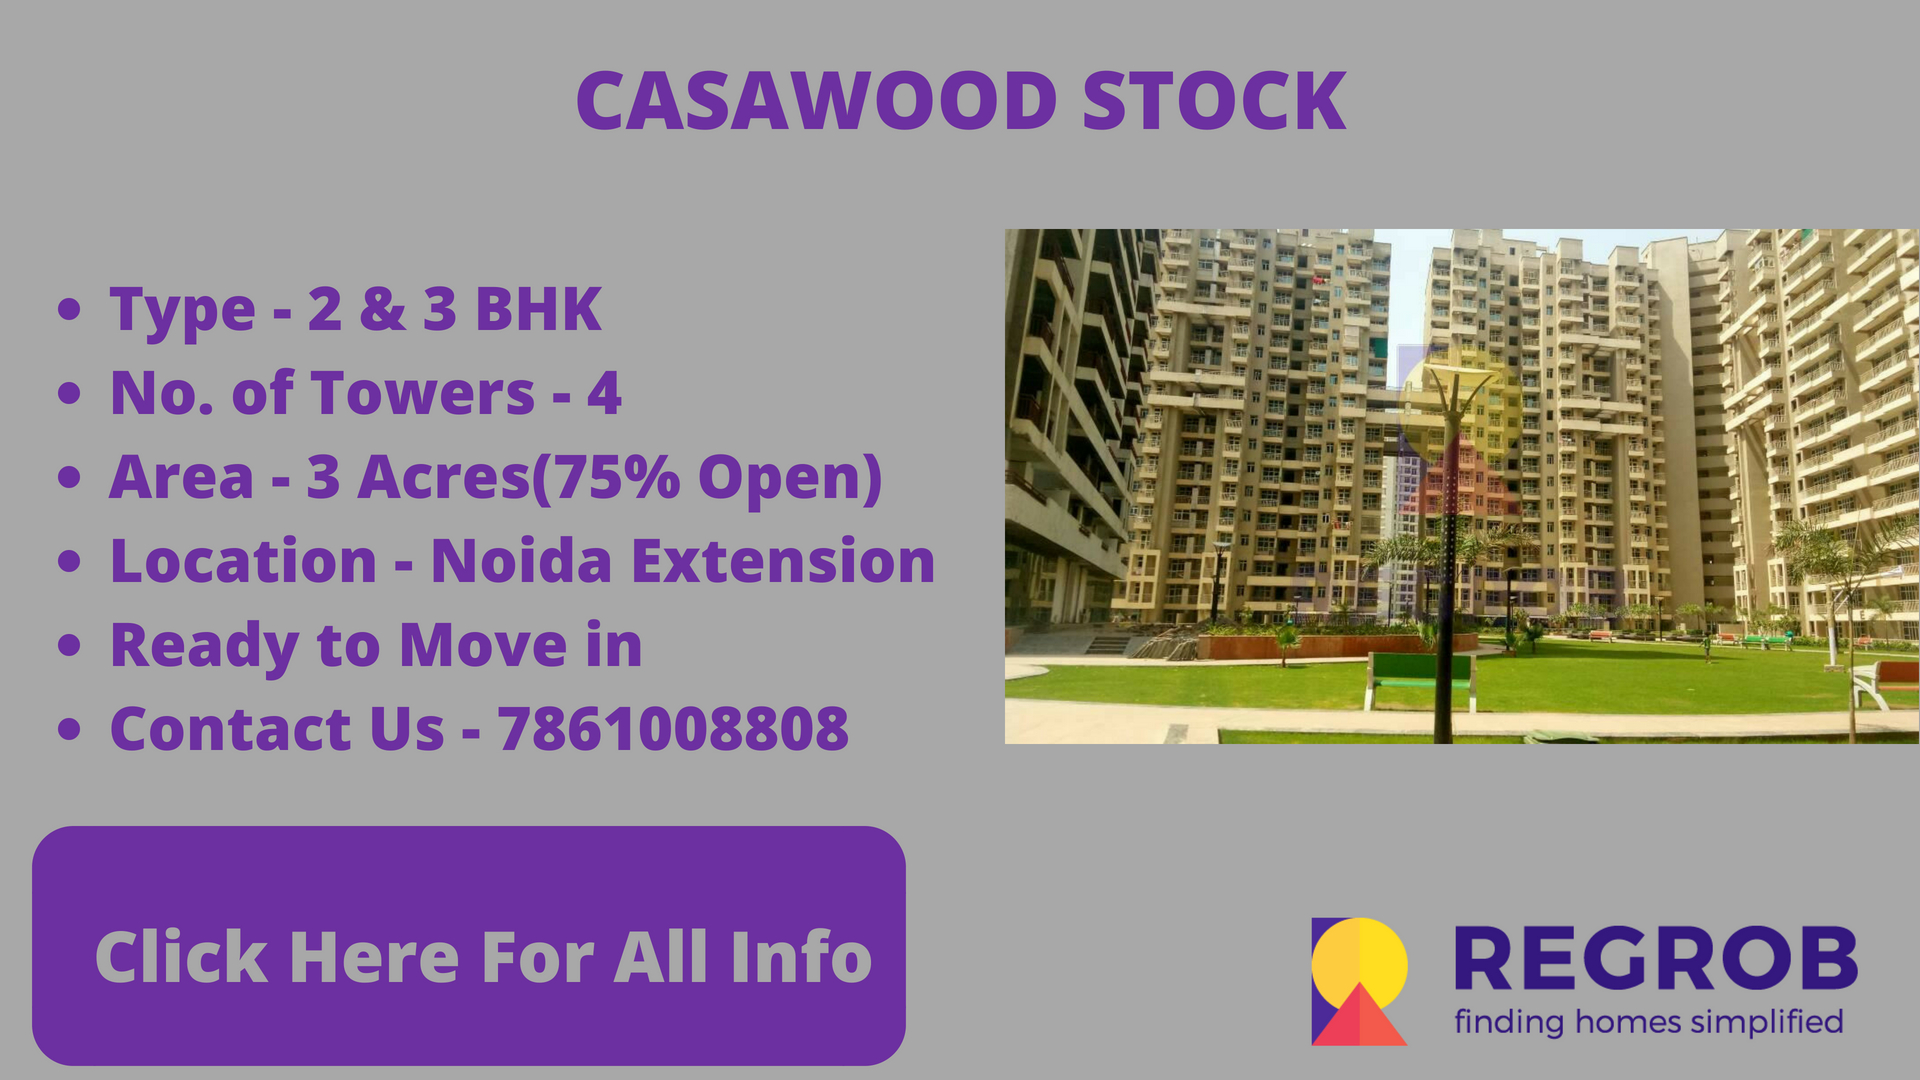 Casawood Stock gaur city 2